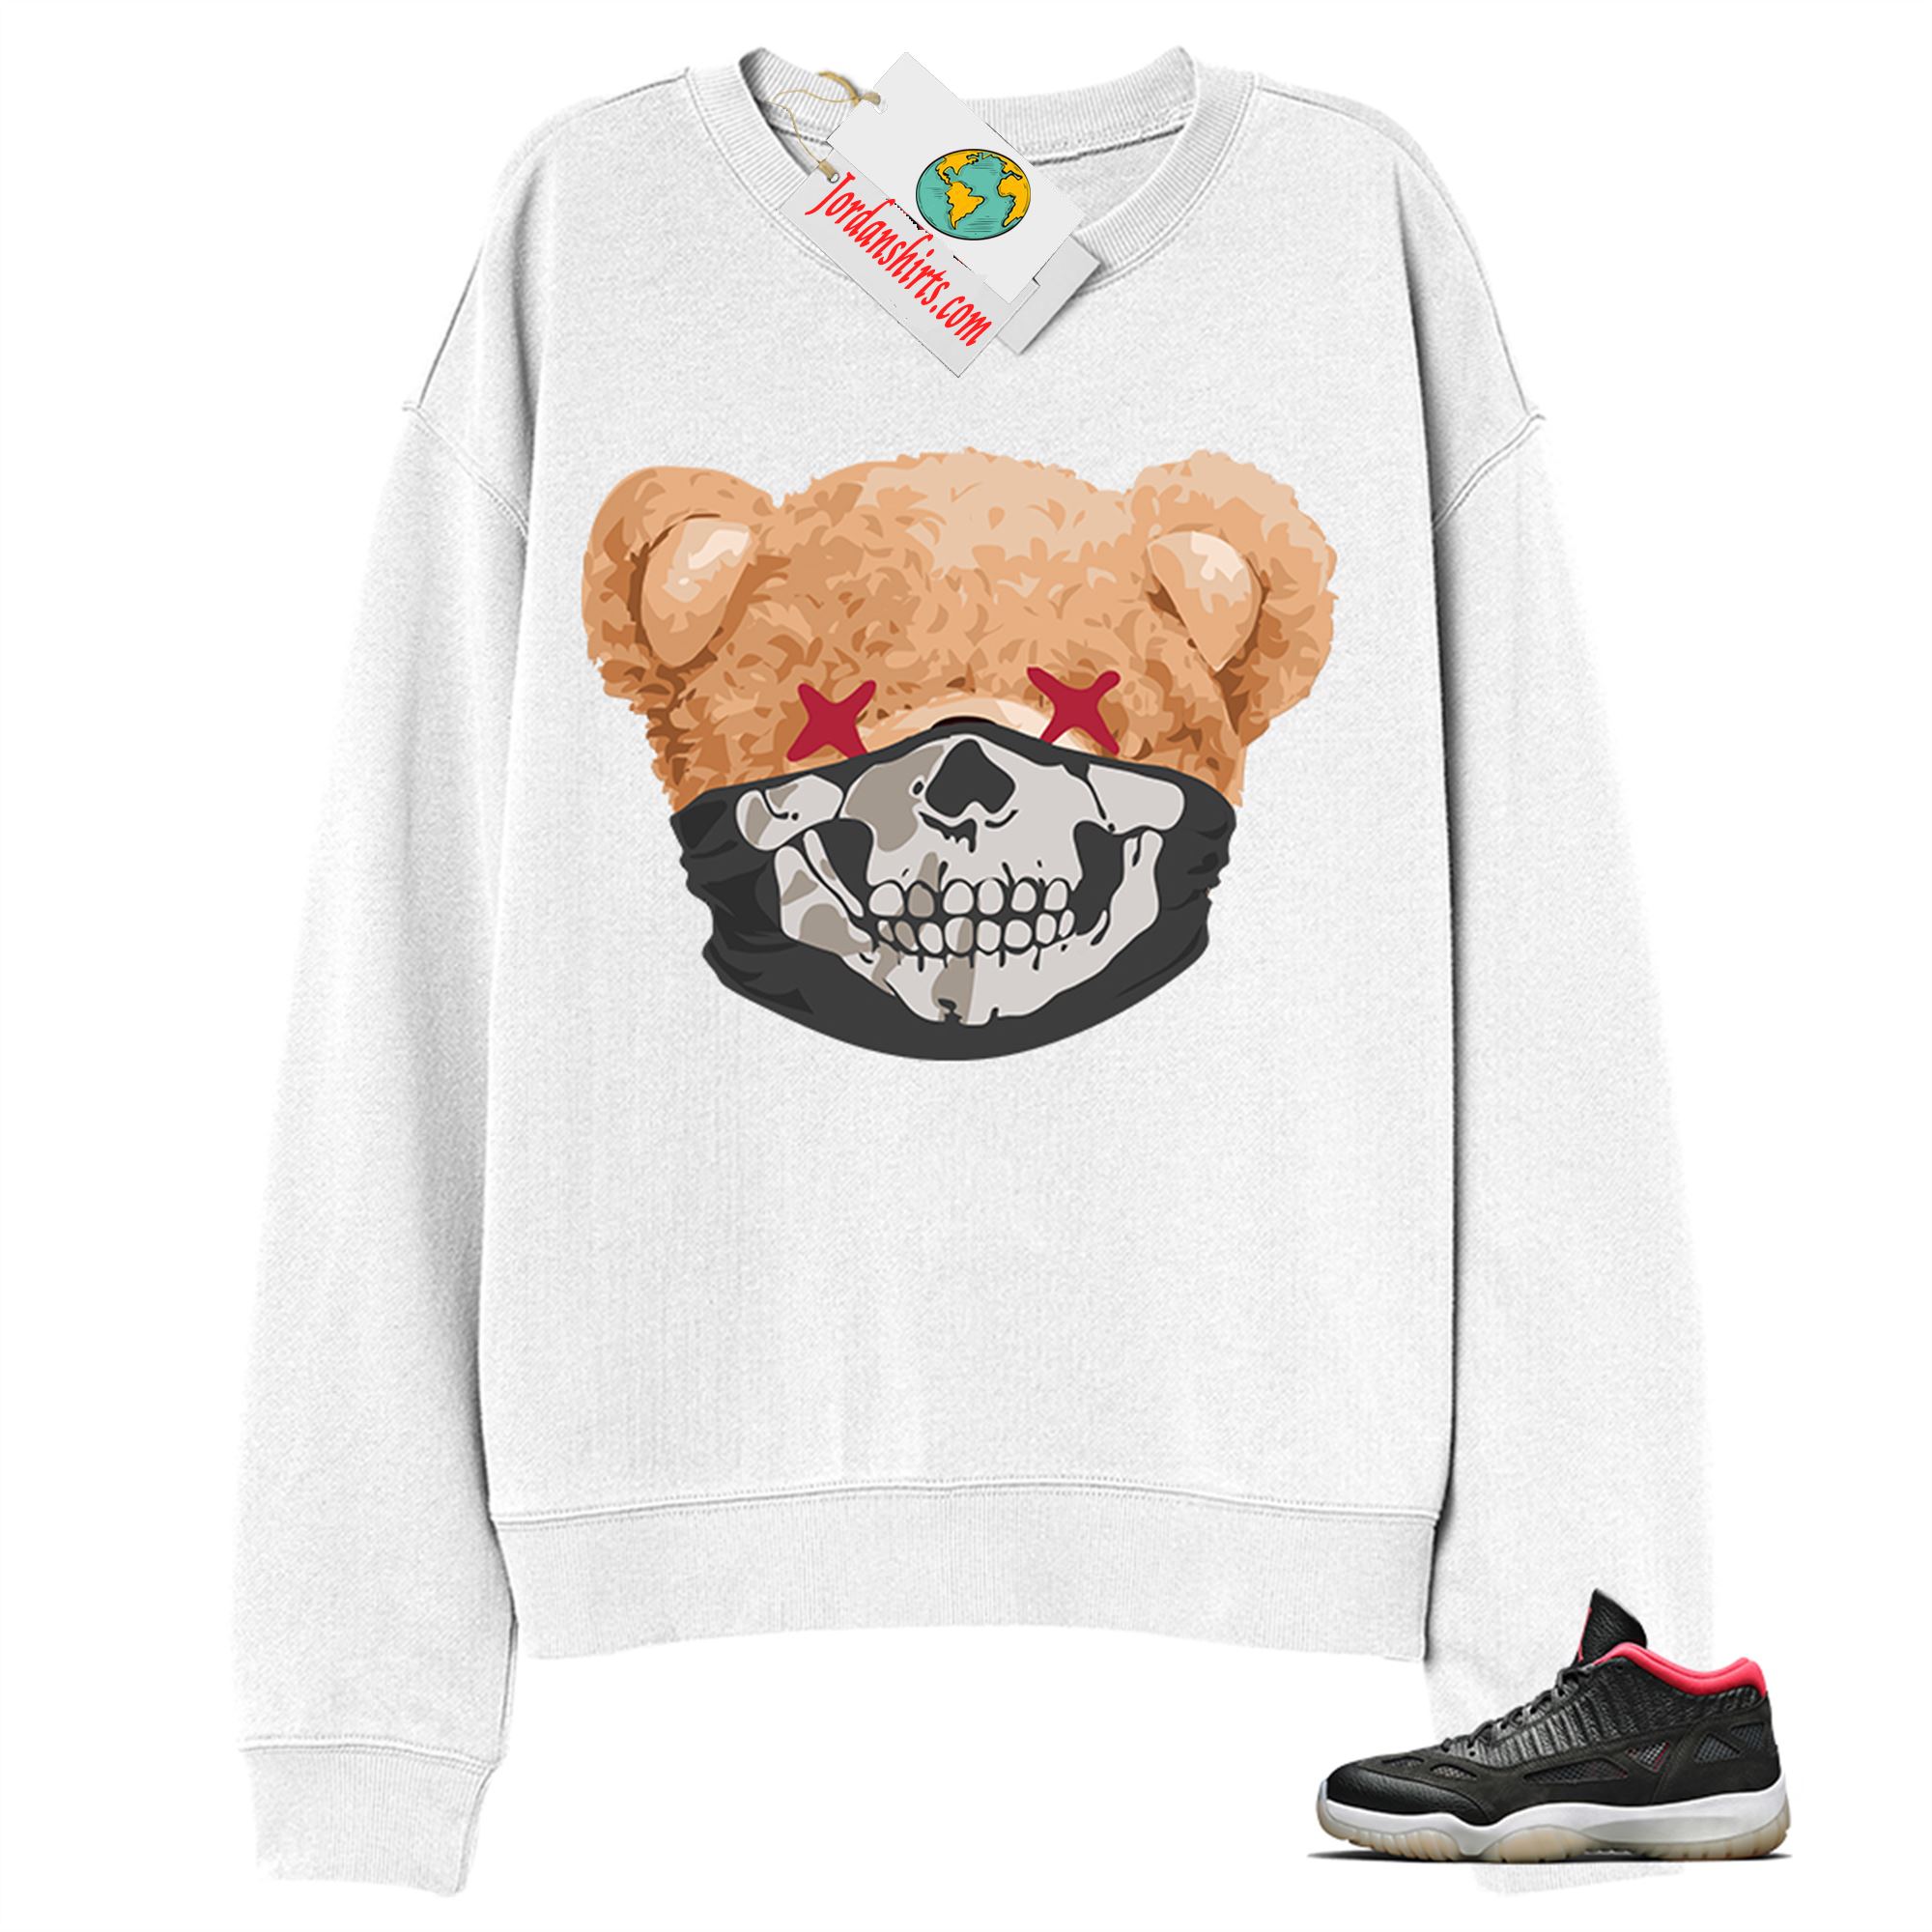 Jordan 11 Sweatshirt, Teddy Bear Skull Bandana White Sweatshirt Air Jordan 11 Bred 11s Plus Size Up To 5xl